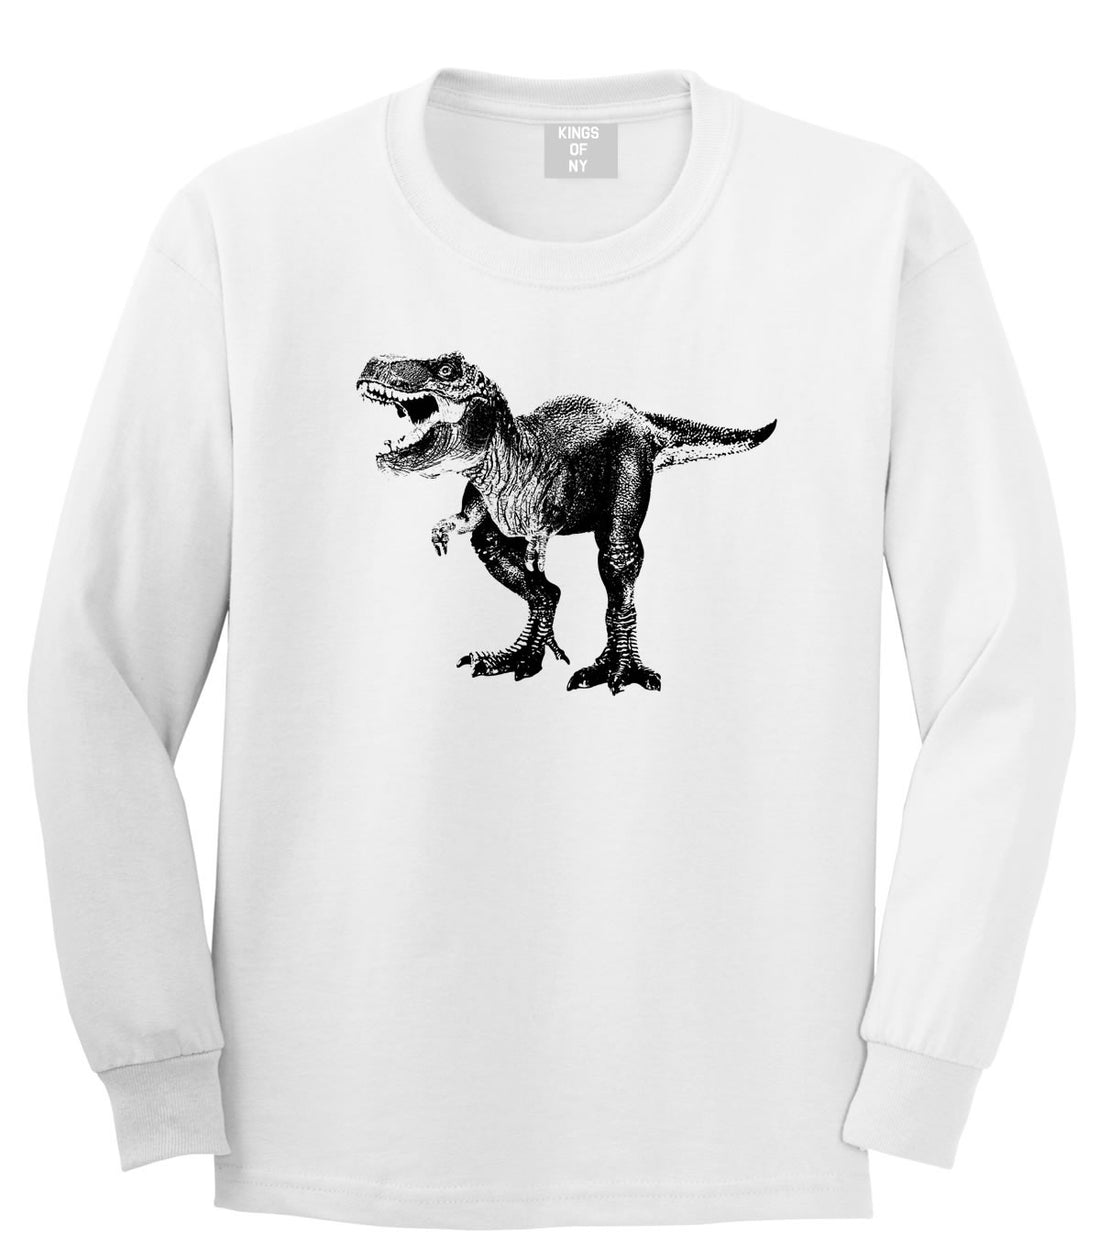 T-Rex Dinosaur Long Sleeve T-Shirt By Kings Of NY